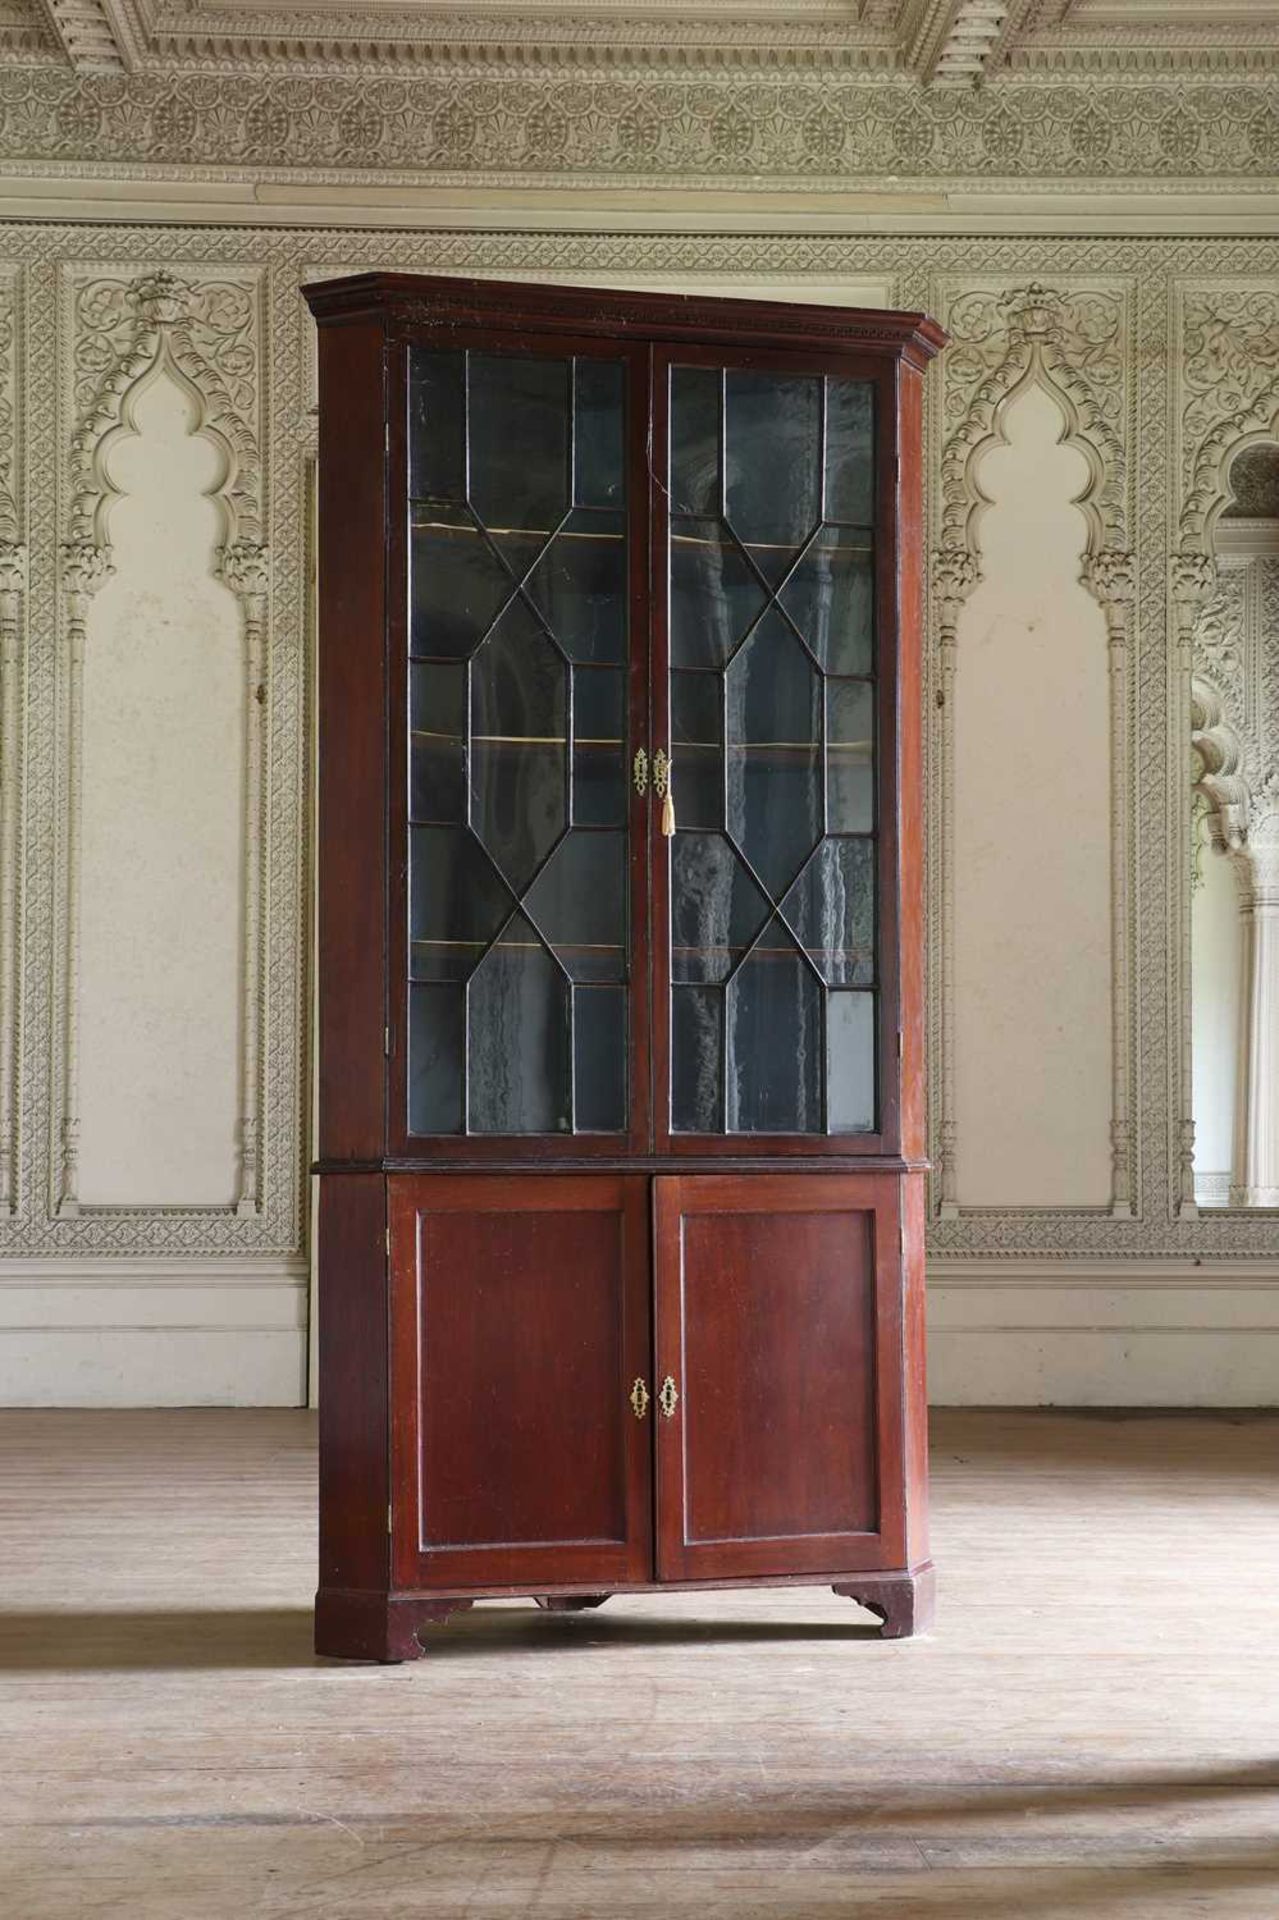 ☘ A George III mahogany standing corner cupboard,